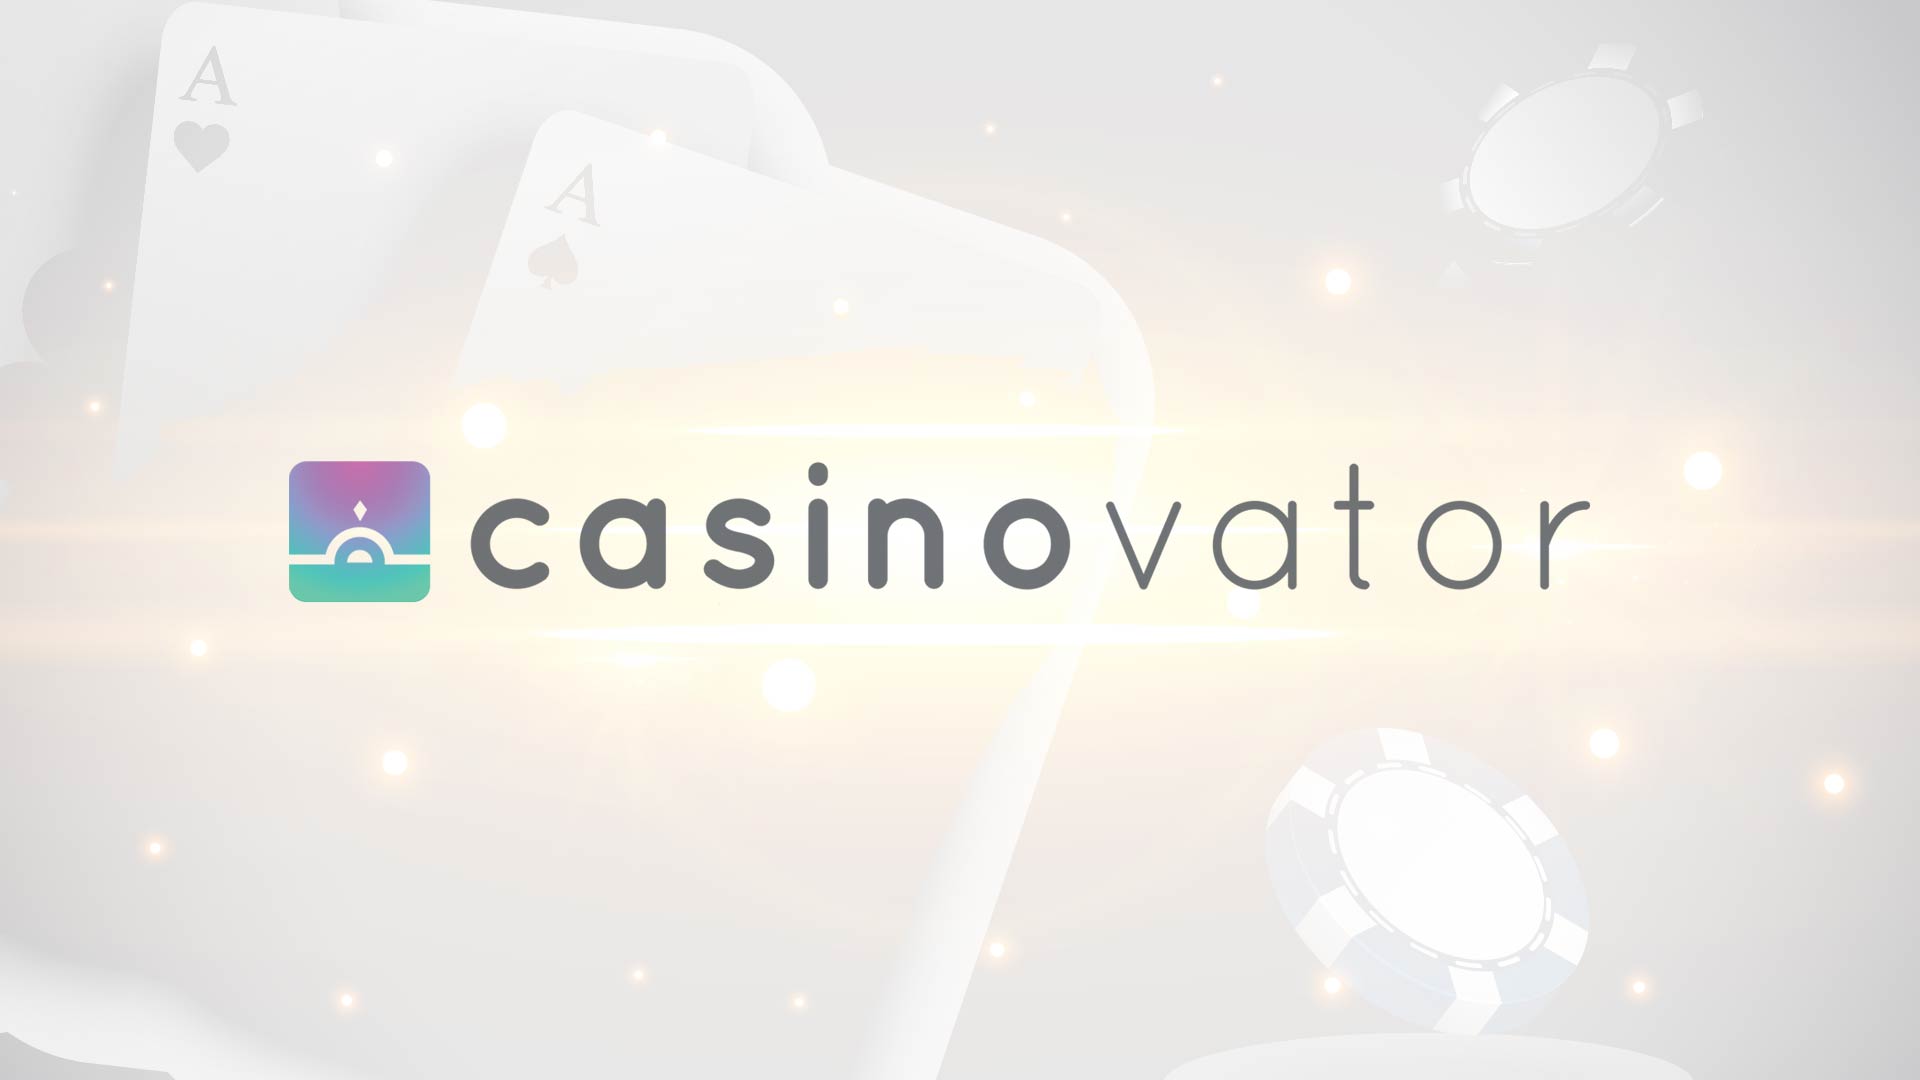 Casinovator placeholder image